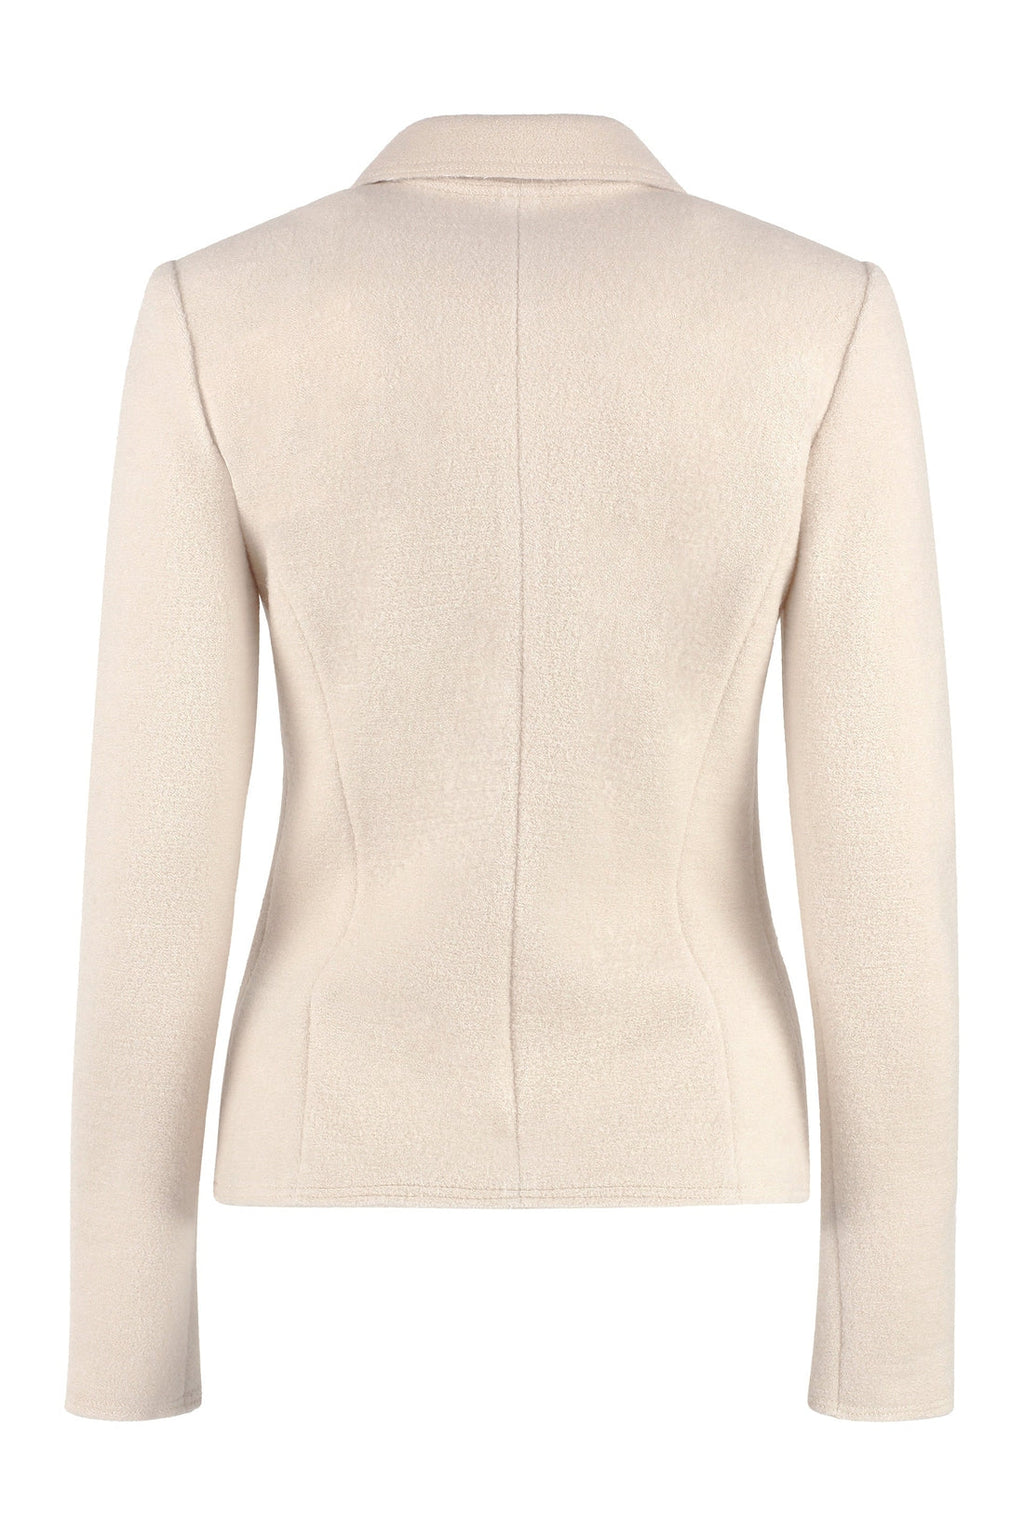 Isabel Marant-OUTLET-SALE-Wool zipped jacket-ARCHIVIST